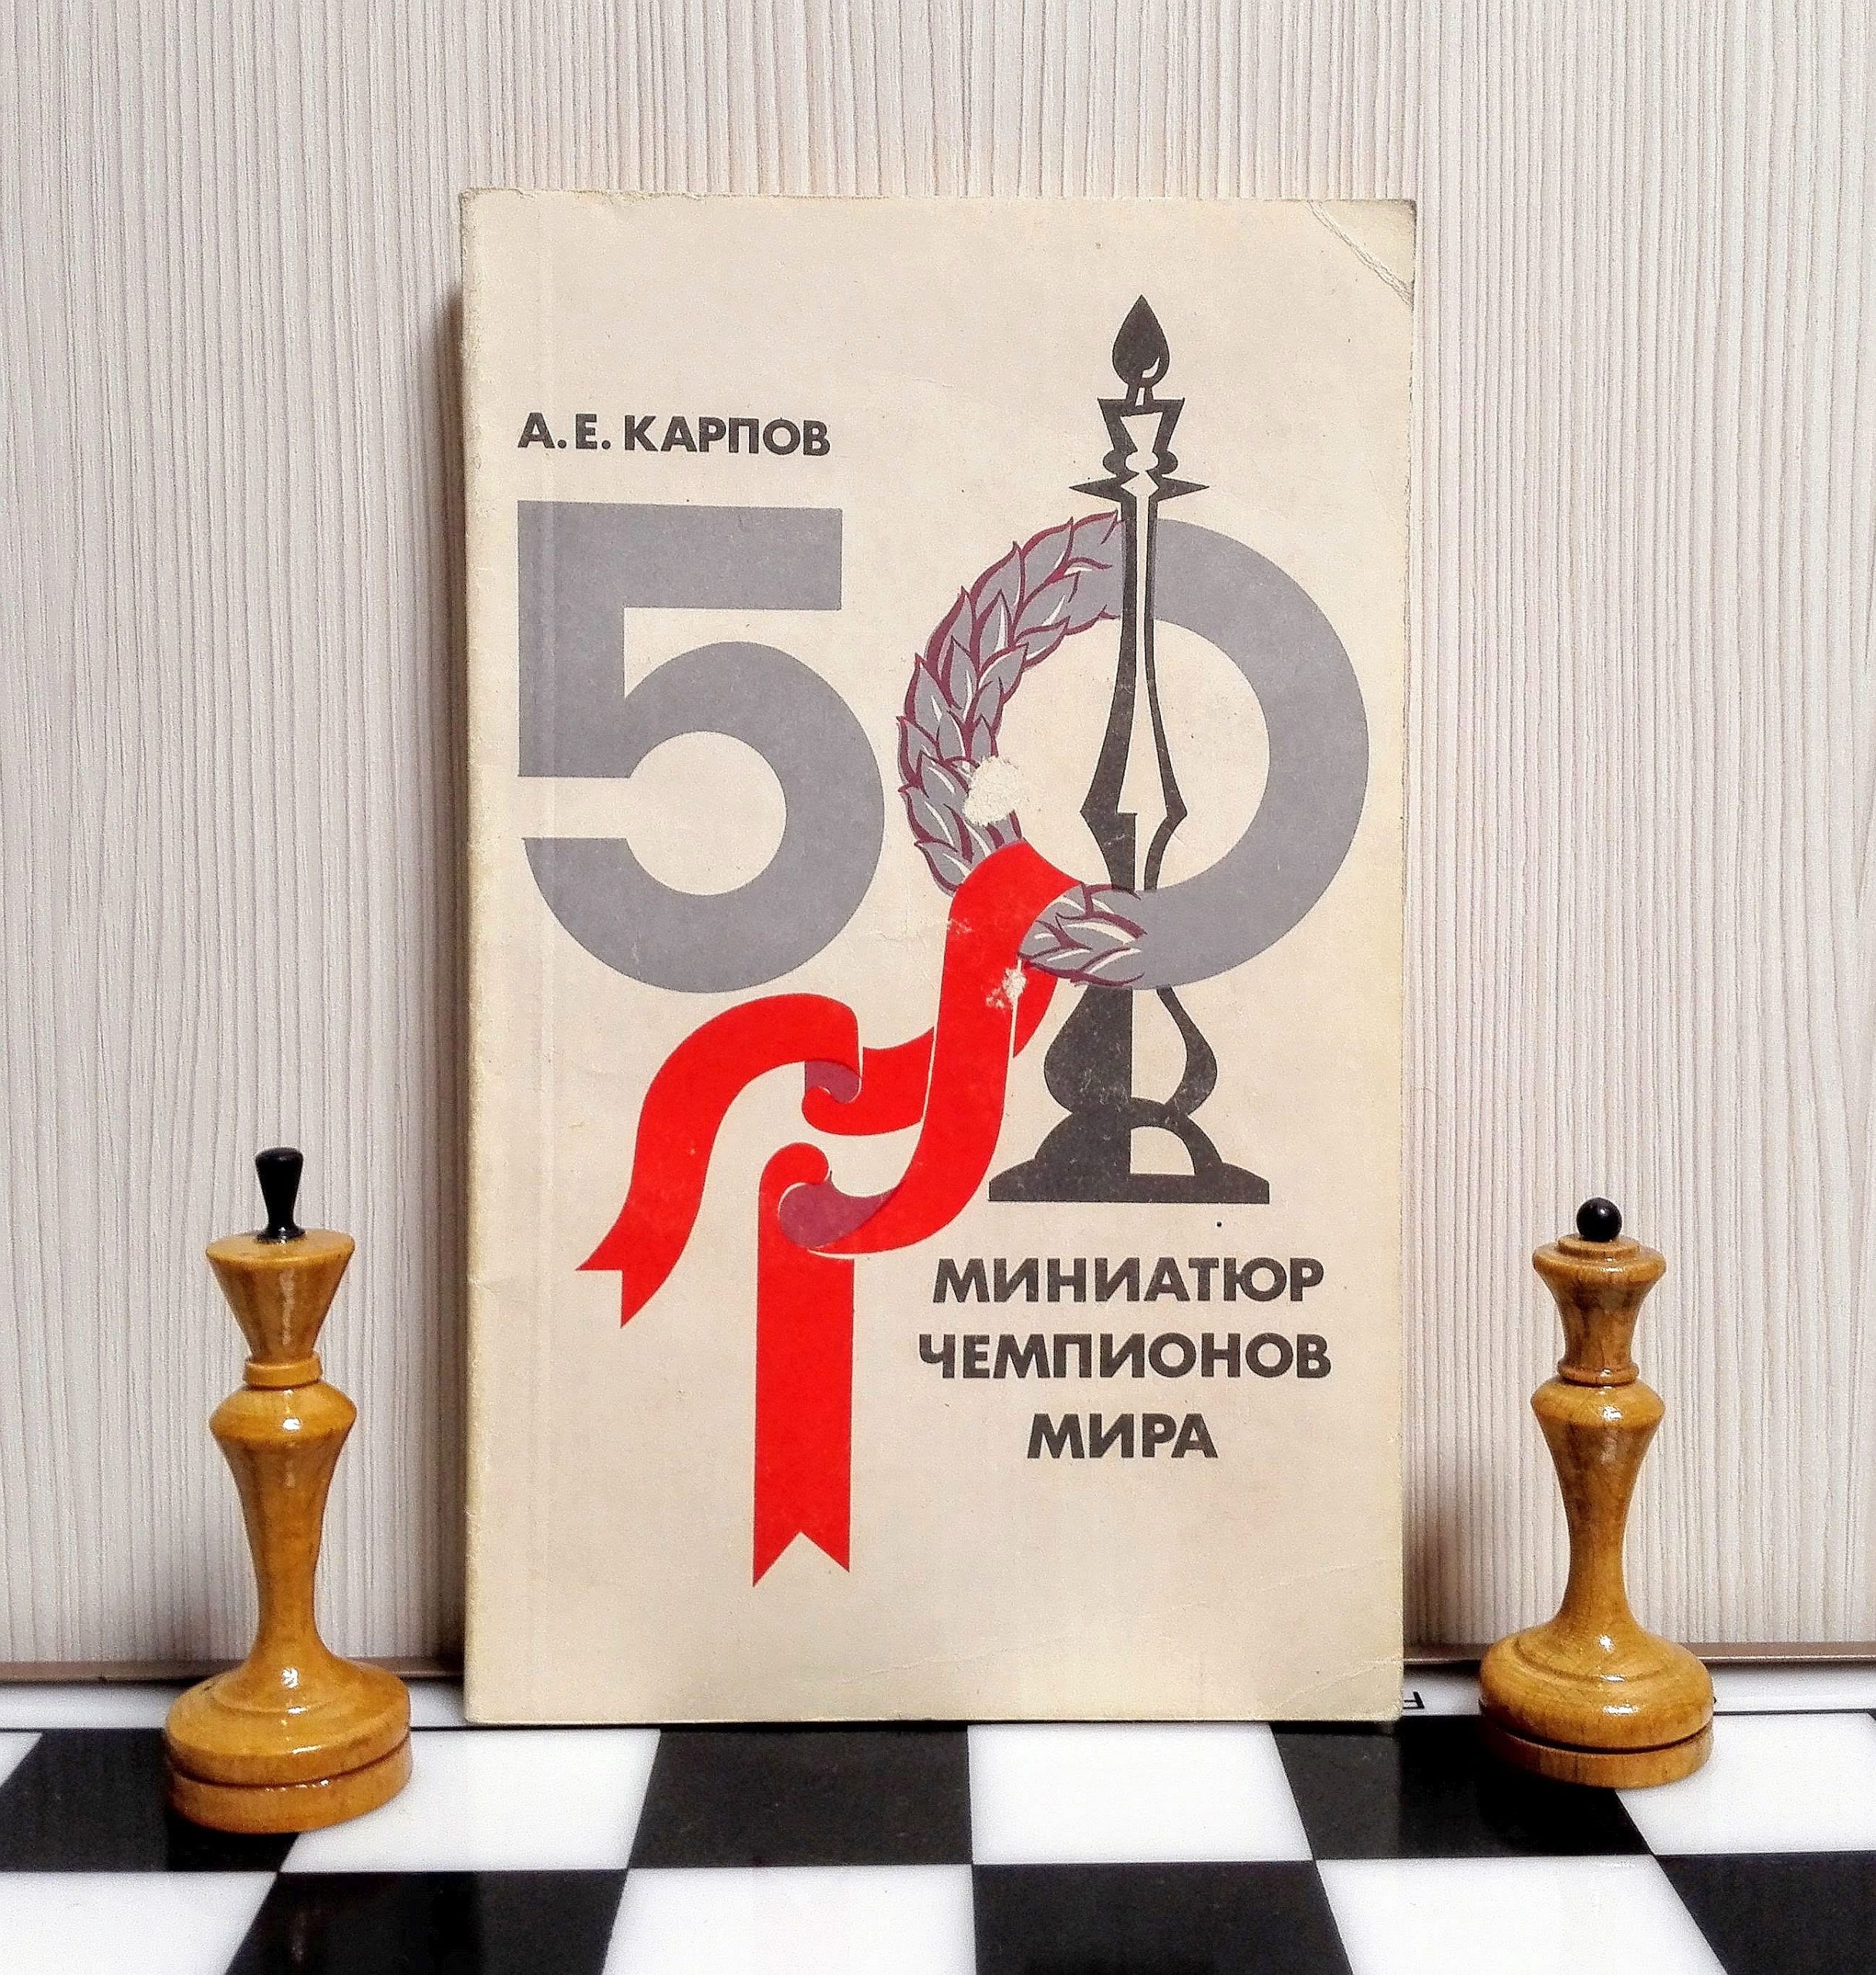 Anatoly Karpov battles Kremlin for control of world chess